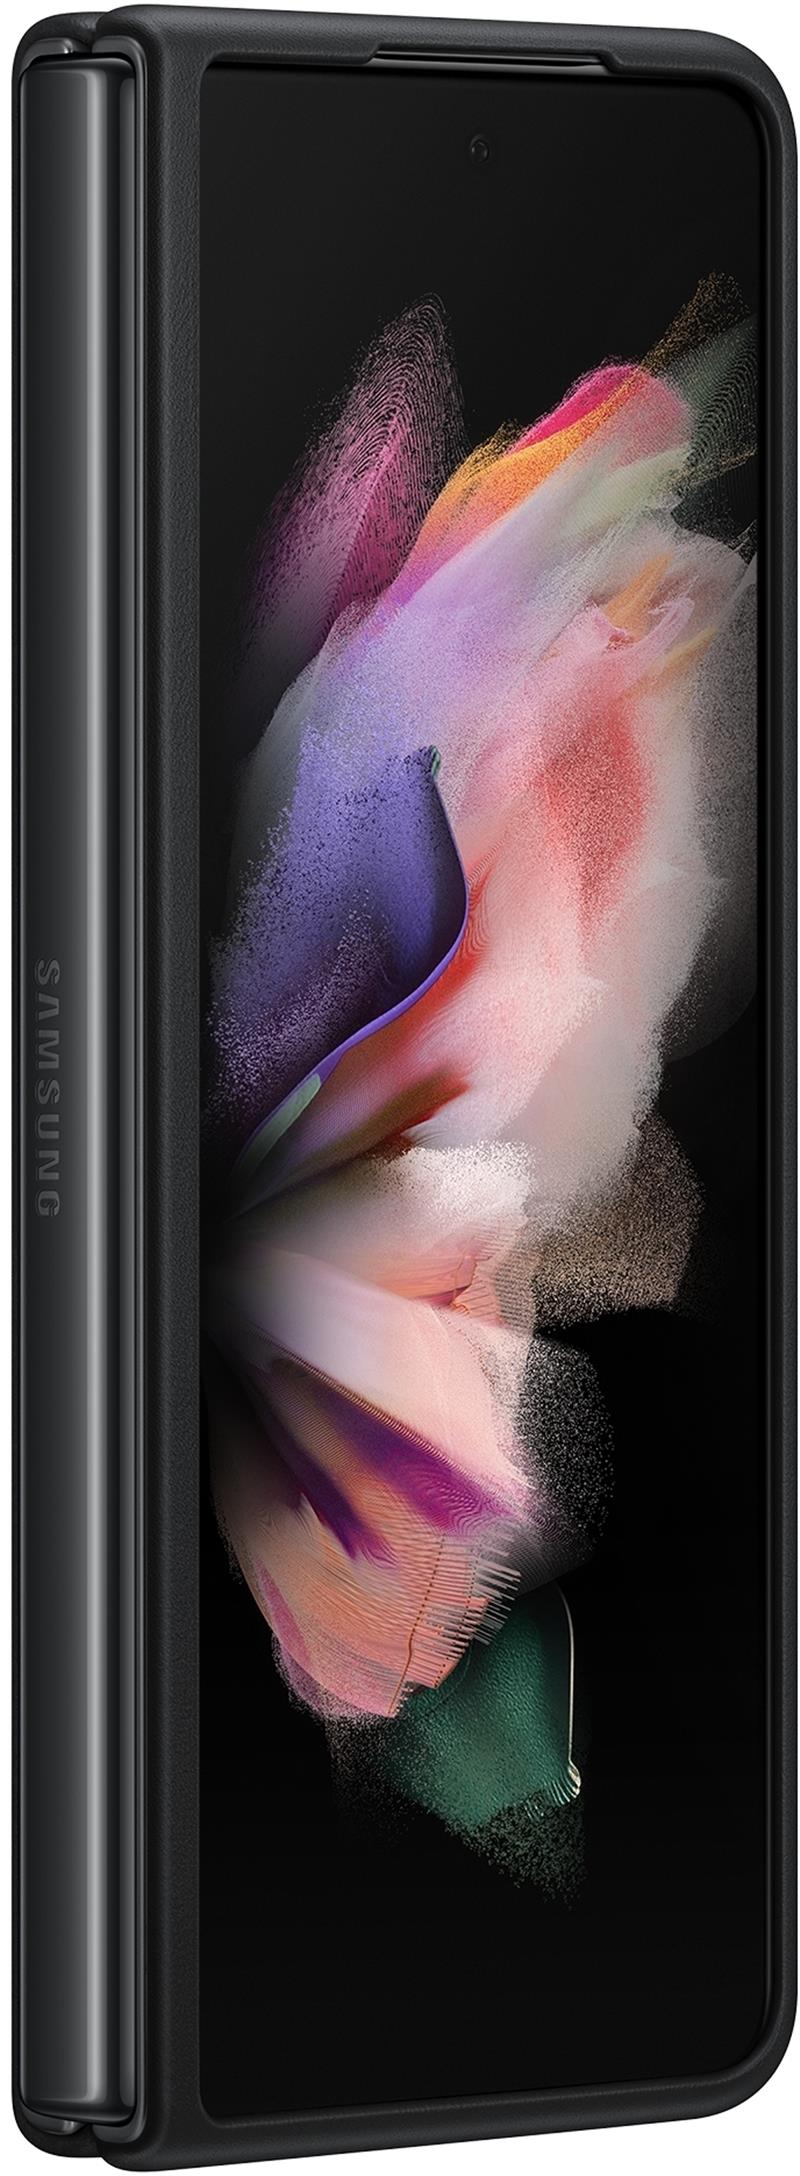 Samsung EF-VF926 mobiele telefoon behuizingen 19,3 cm (7.6"") Hoes Zwart